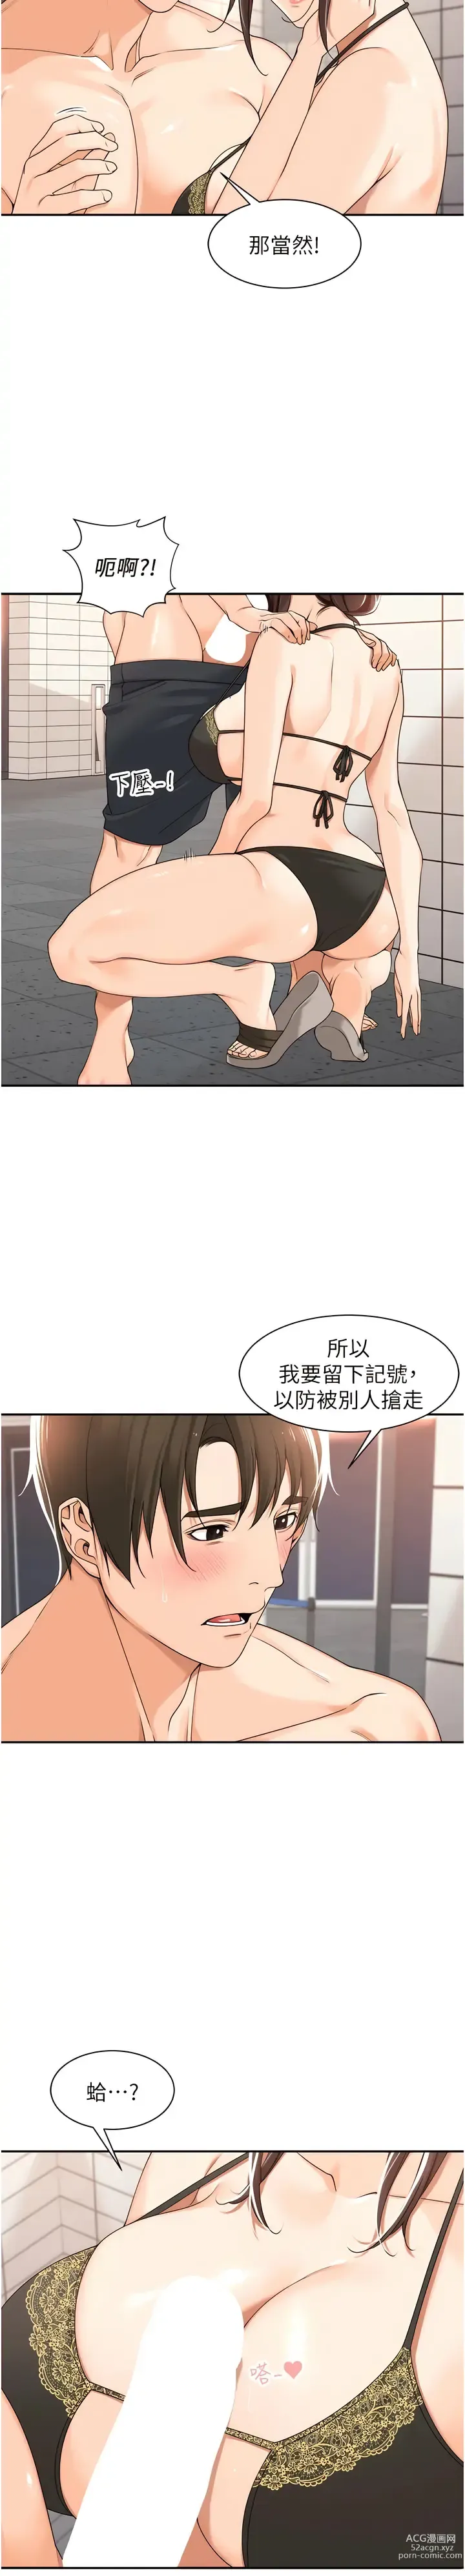 Page 4 of manga 工做狂女上司 19-22話